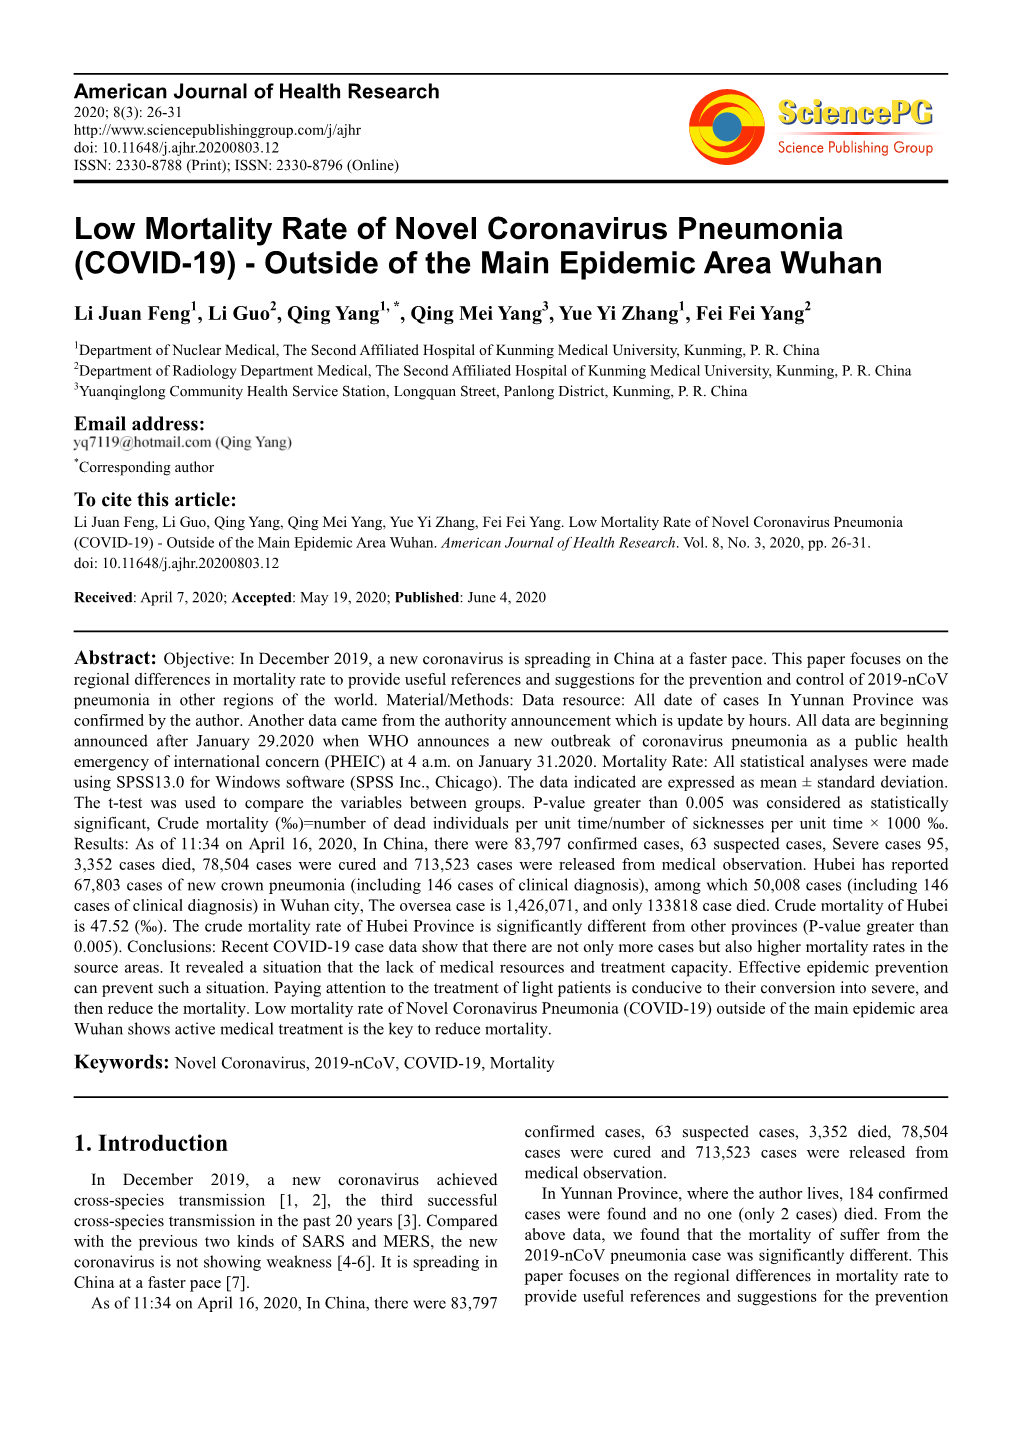 Low Mortality Rate of Novel Coronavirus Pneumonia (COVID-19) - Outside of the Main Epidemic Area Wuhan